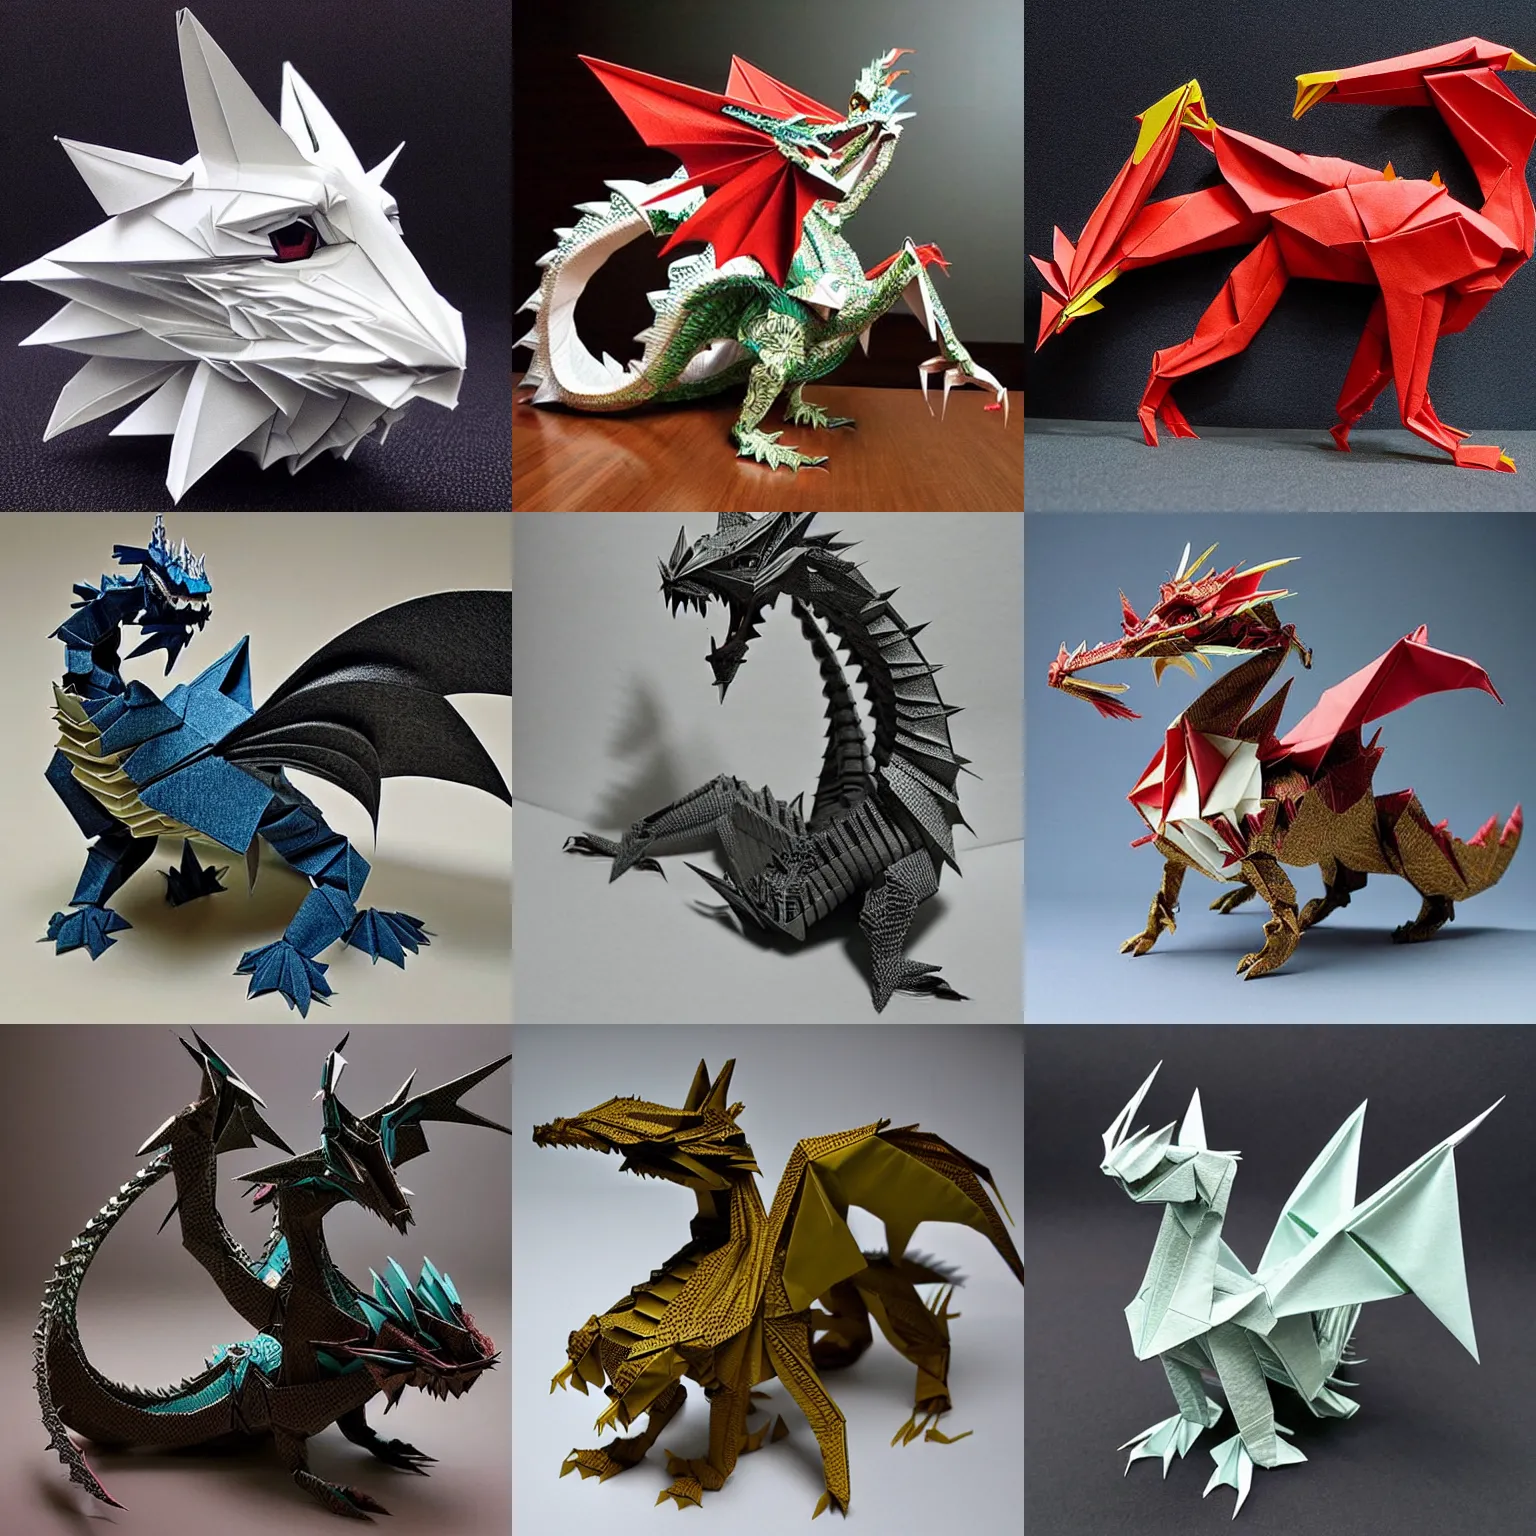 Prompt: gorgeous origami dragon, incredibly detailed, by Satoshi Kamiya